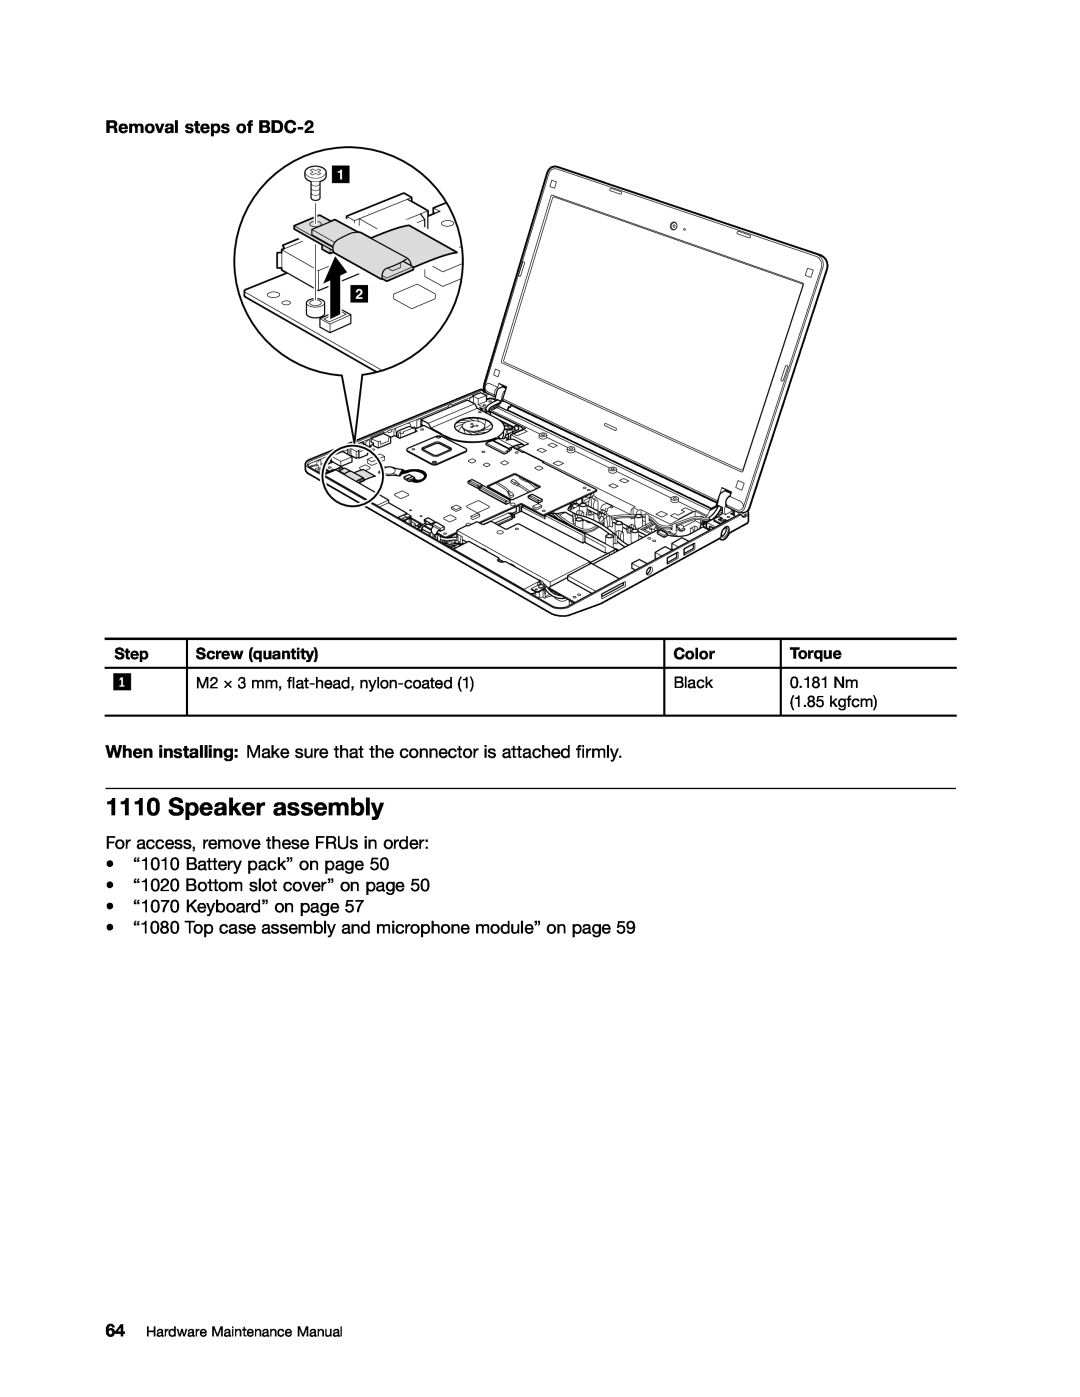 Lenovo E30, E31, EDGE 13 manual Speaker assembly, Removal steps of BDC-2 